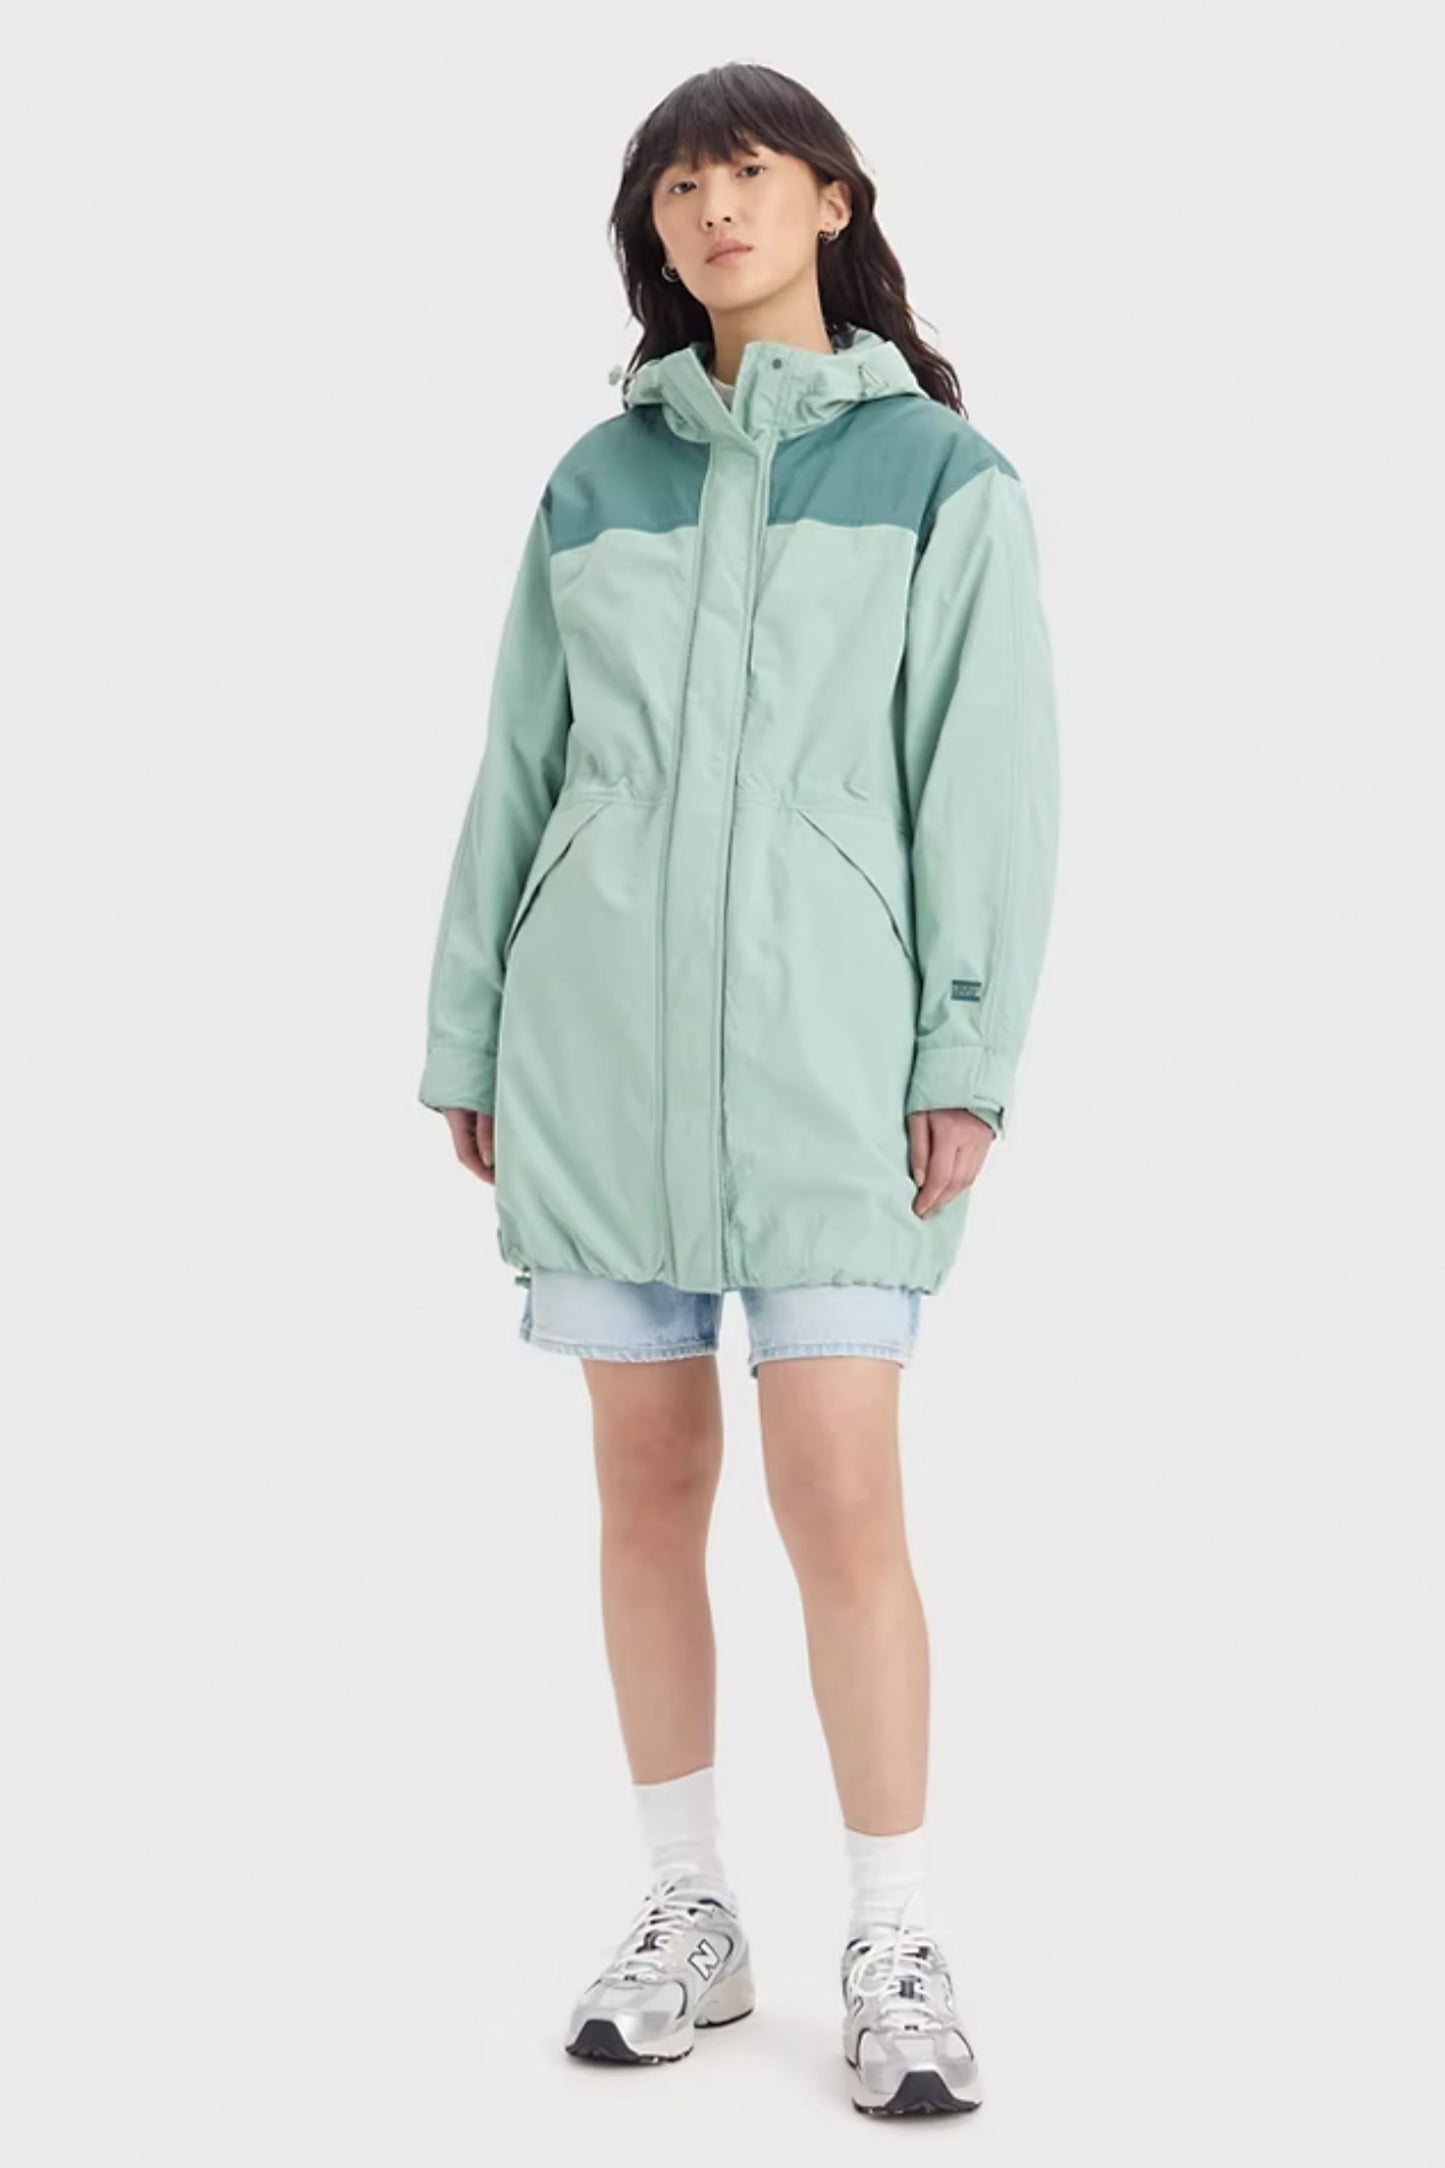    Pukas-Surf-Shop-levis-jacket-misty-rain-jacket